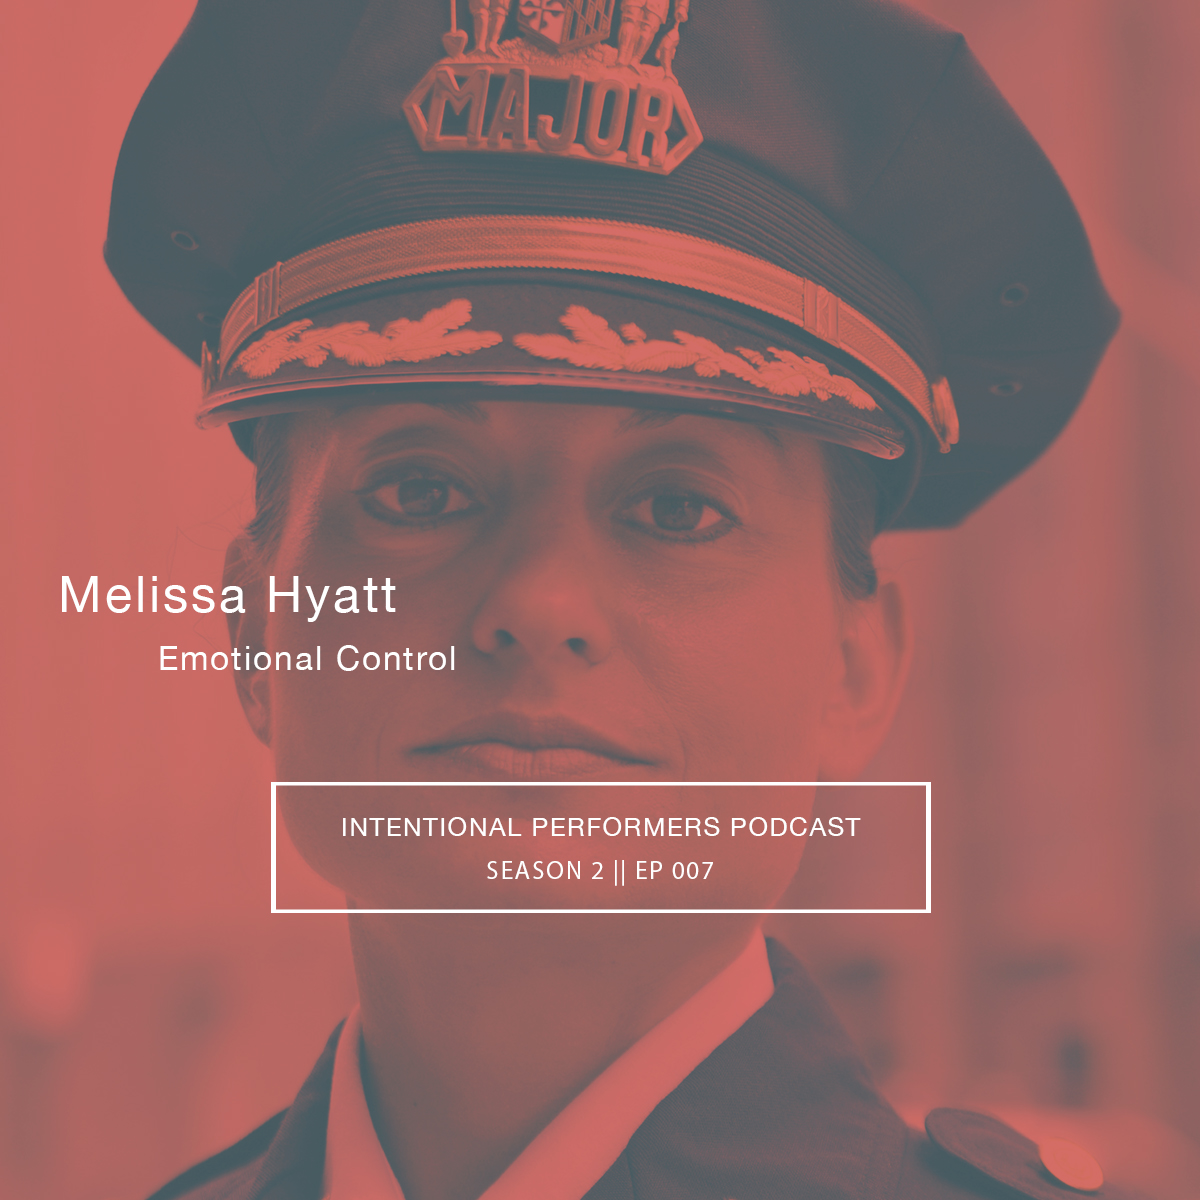 Melissa Hyatt on Emotional Control